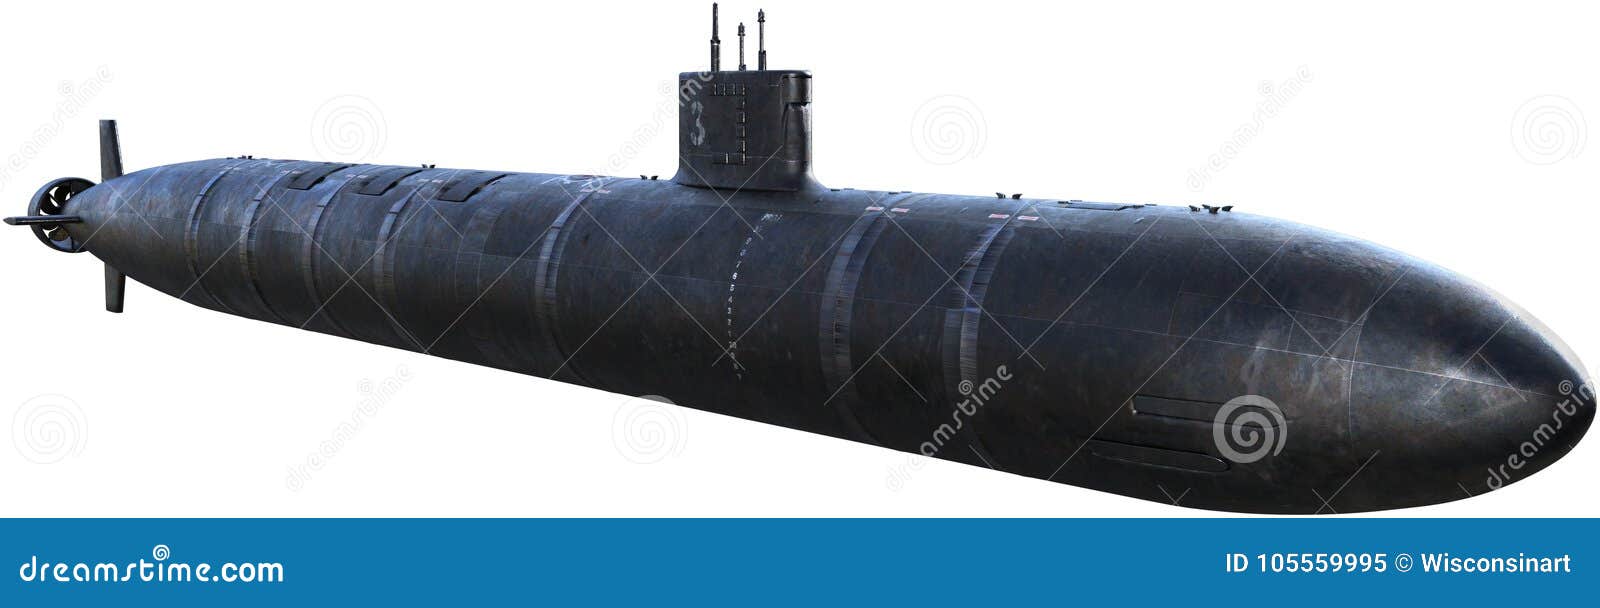 military nuclear submarine ship, 